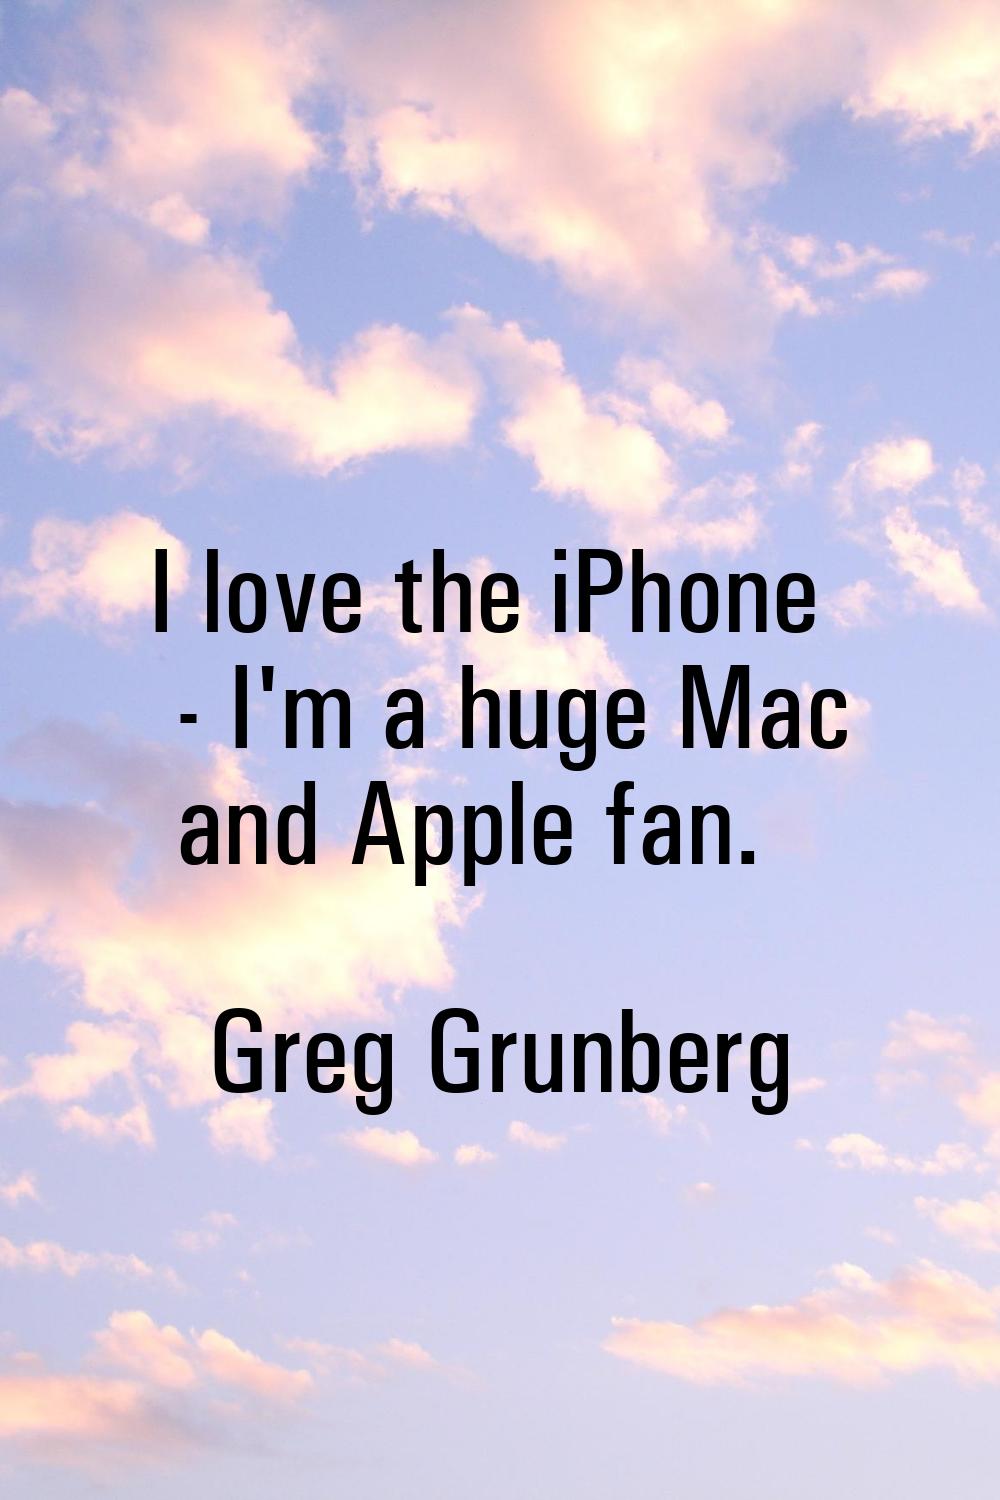 I love the iPhone - I'm a huge Mac and Apple fan.